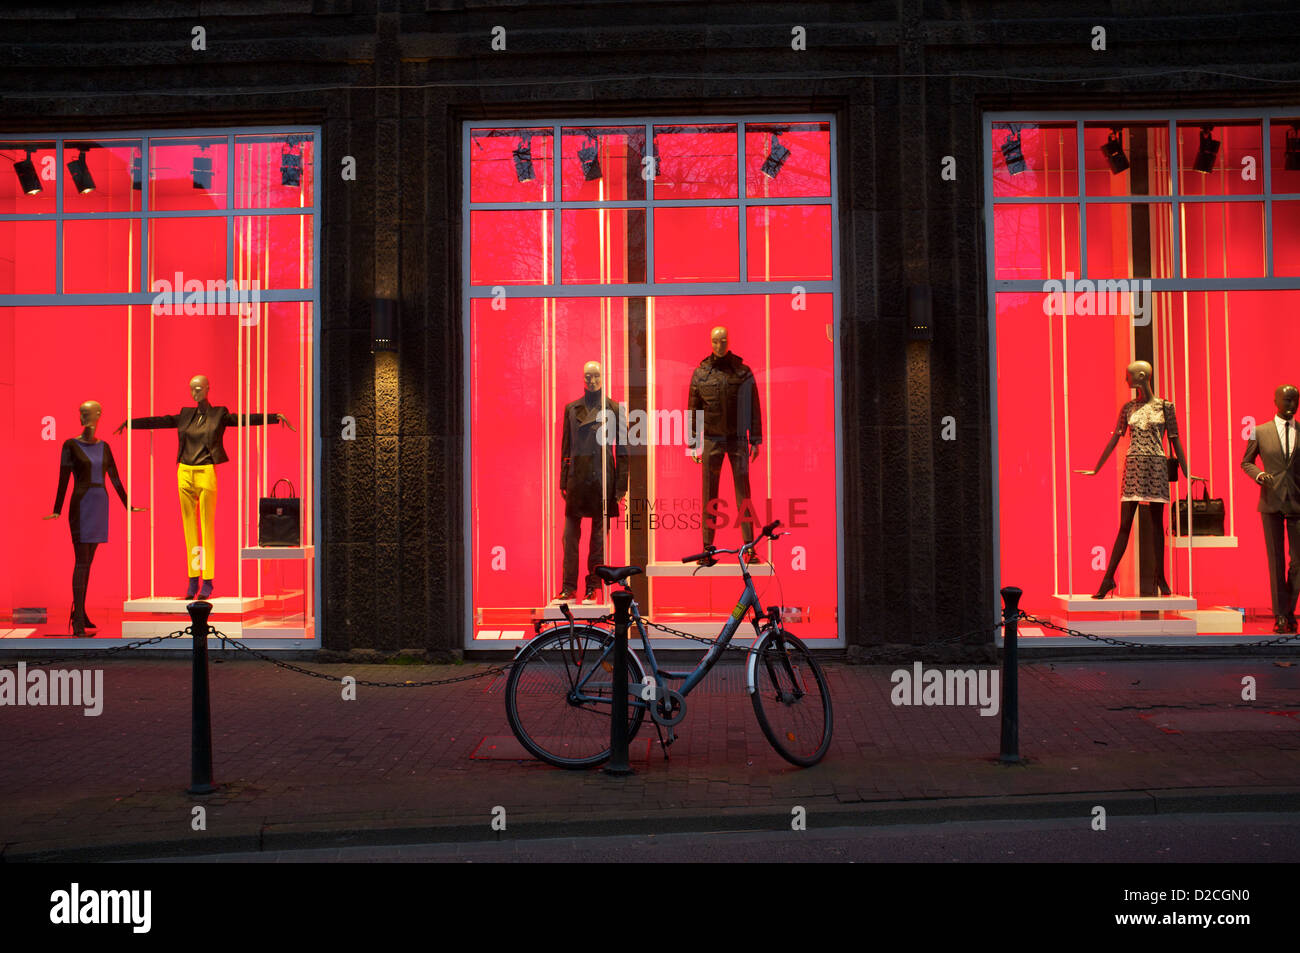 Hugo Boss shop, Dusseldorf, Germany Stock Photo - Alamy